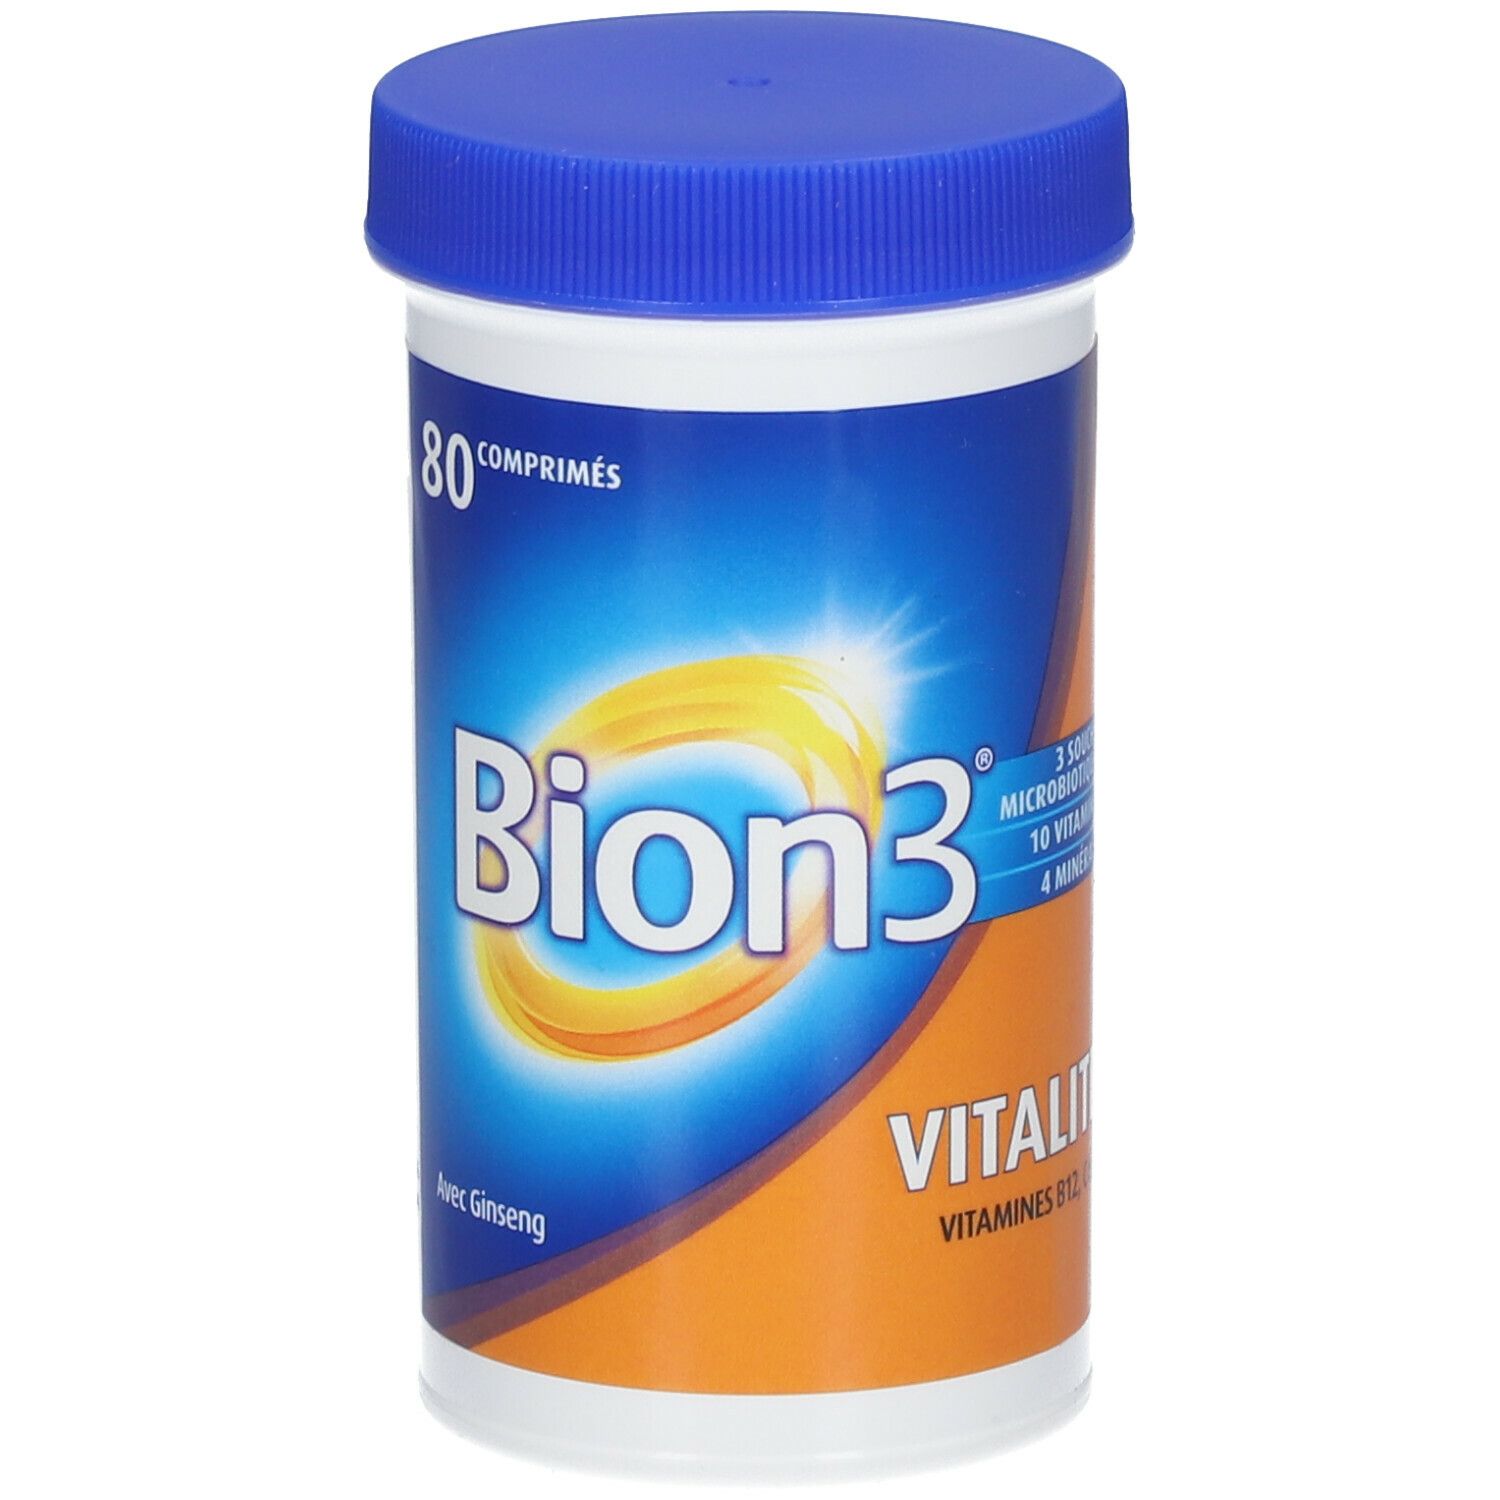 Bion®3 Vitalité